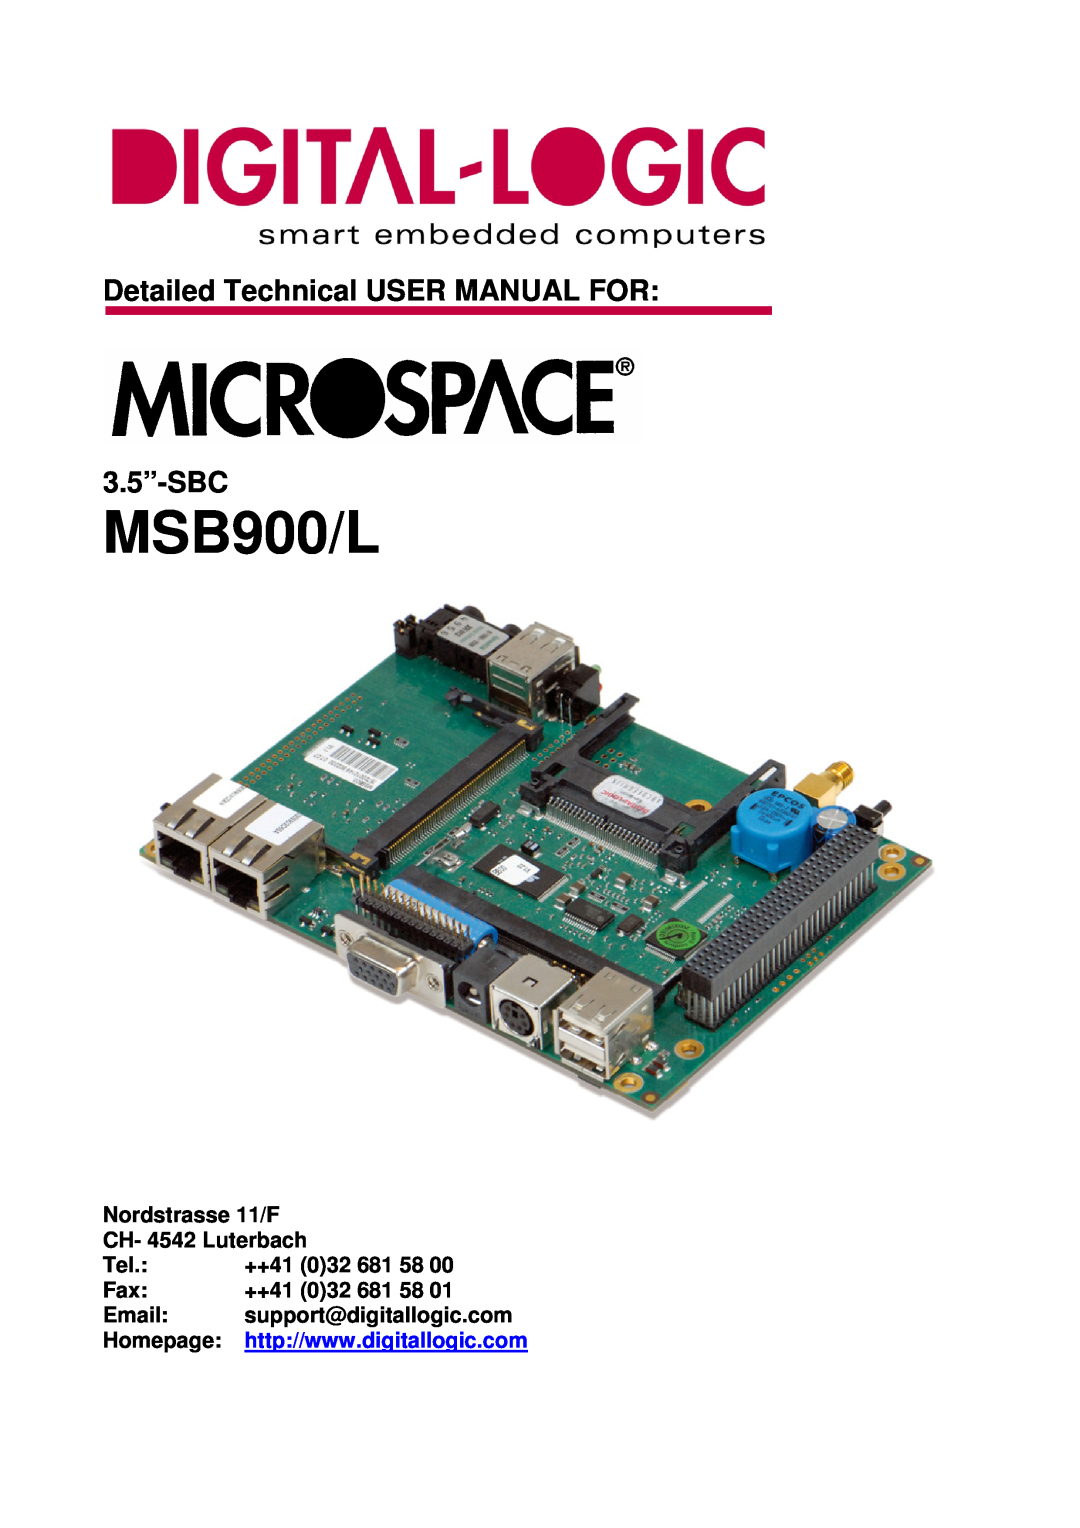 Compaq MSB900 user manual Nordstrasse 11/F CH- 4542 Luterbach, ++41 032 681 58, support@digitallogic.com, Homepage 